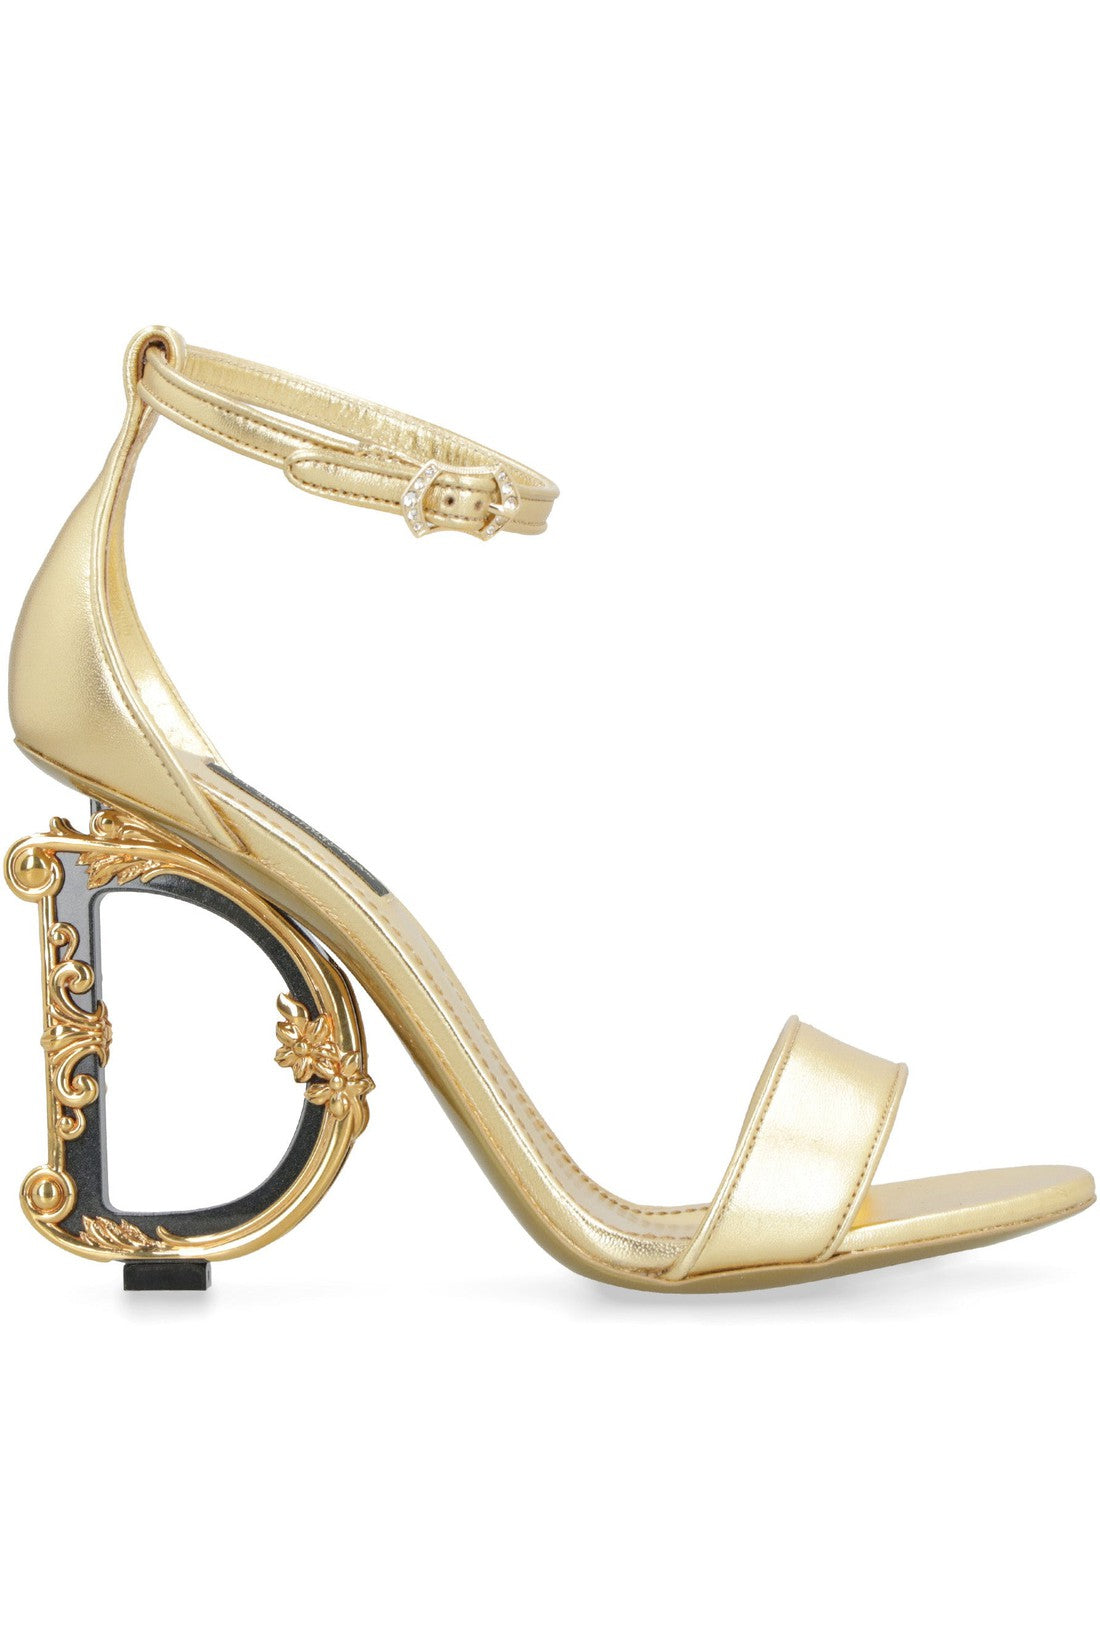 Dolce & Gabbana-OUTLET-SALE-Keira metallic leather sandals-ARCHIVIST